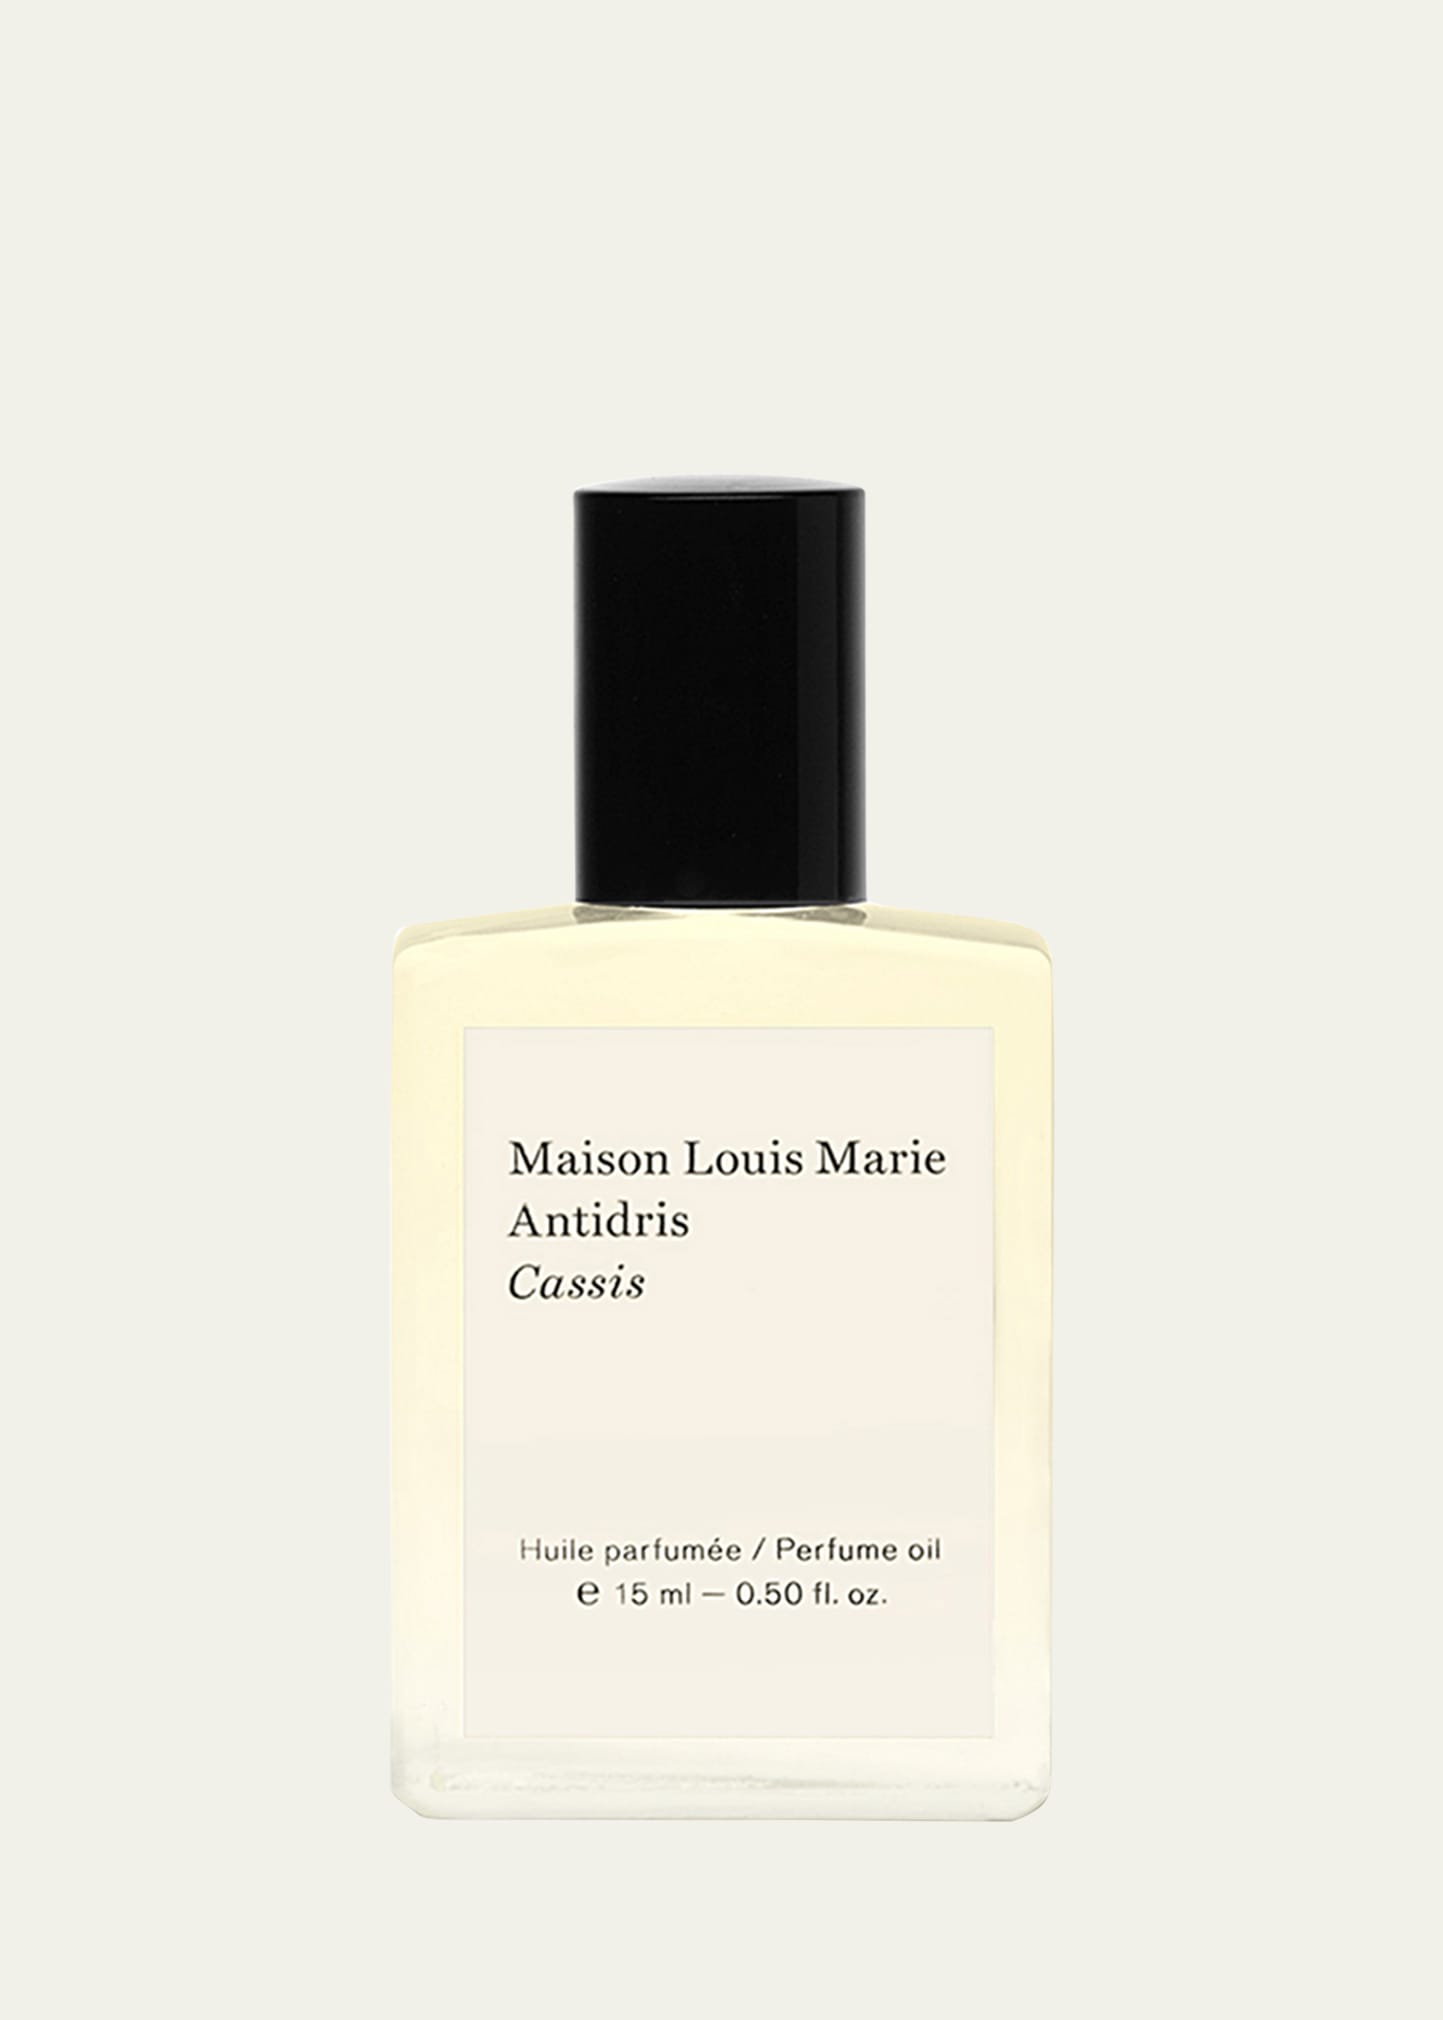 Maison Louis Marie 0.5 oz. Antidris Cassis Perfume Oil